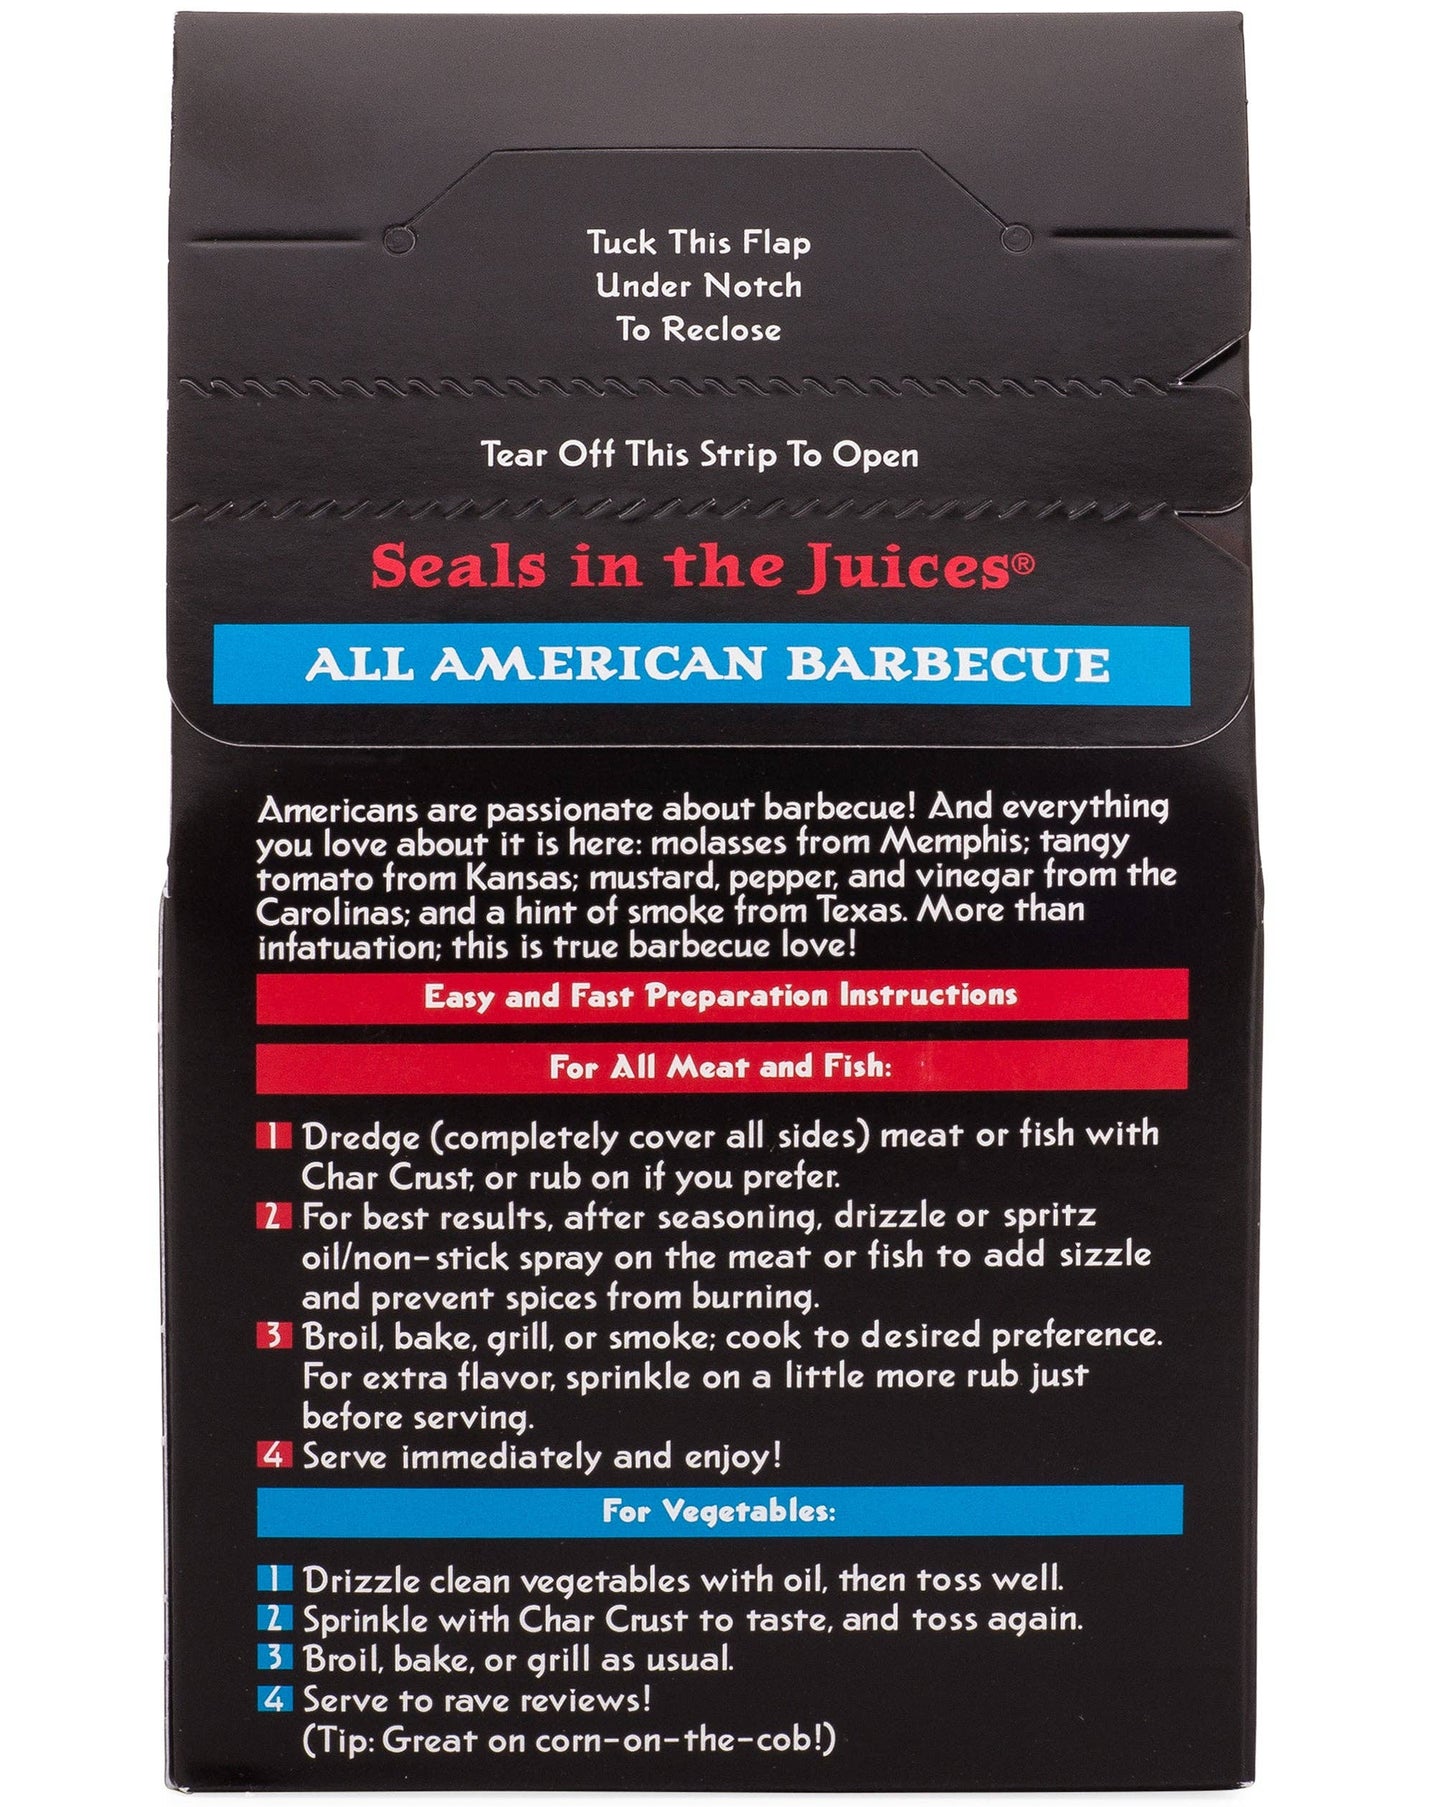 Char Crust Dry-Rub Seasoning All American Barbecue (6 pack)